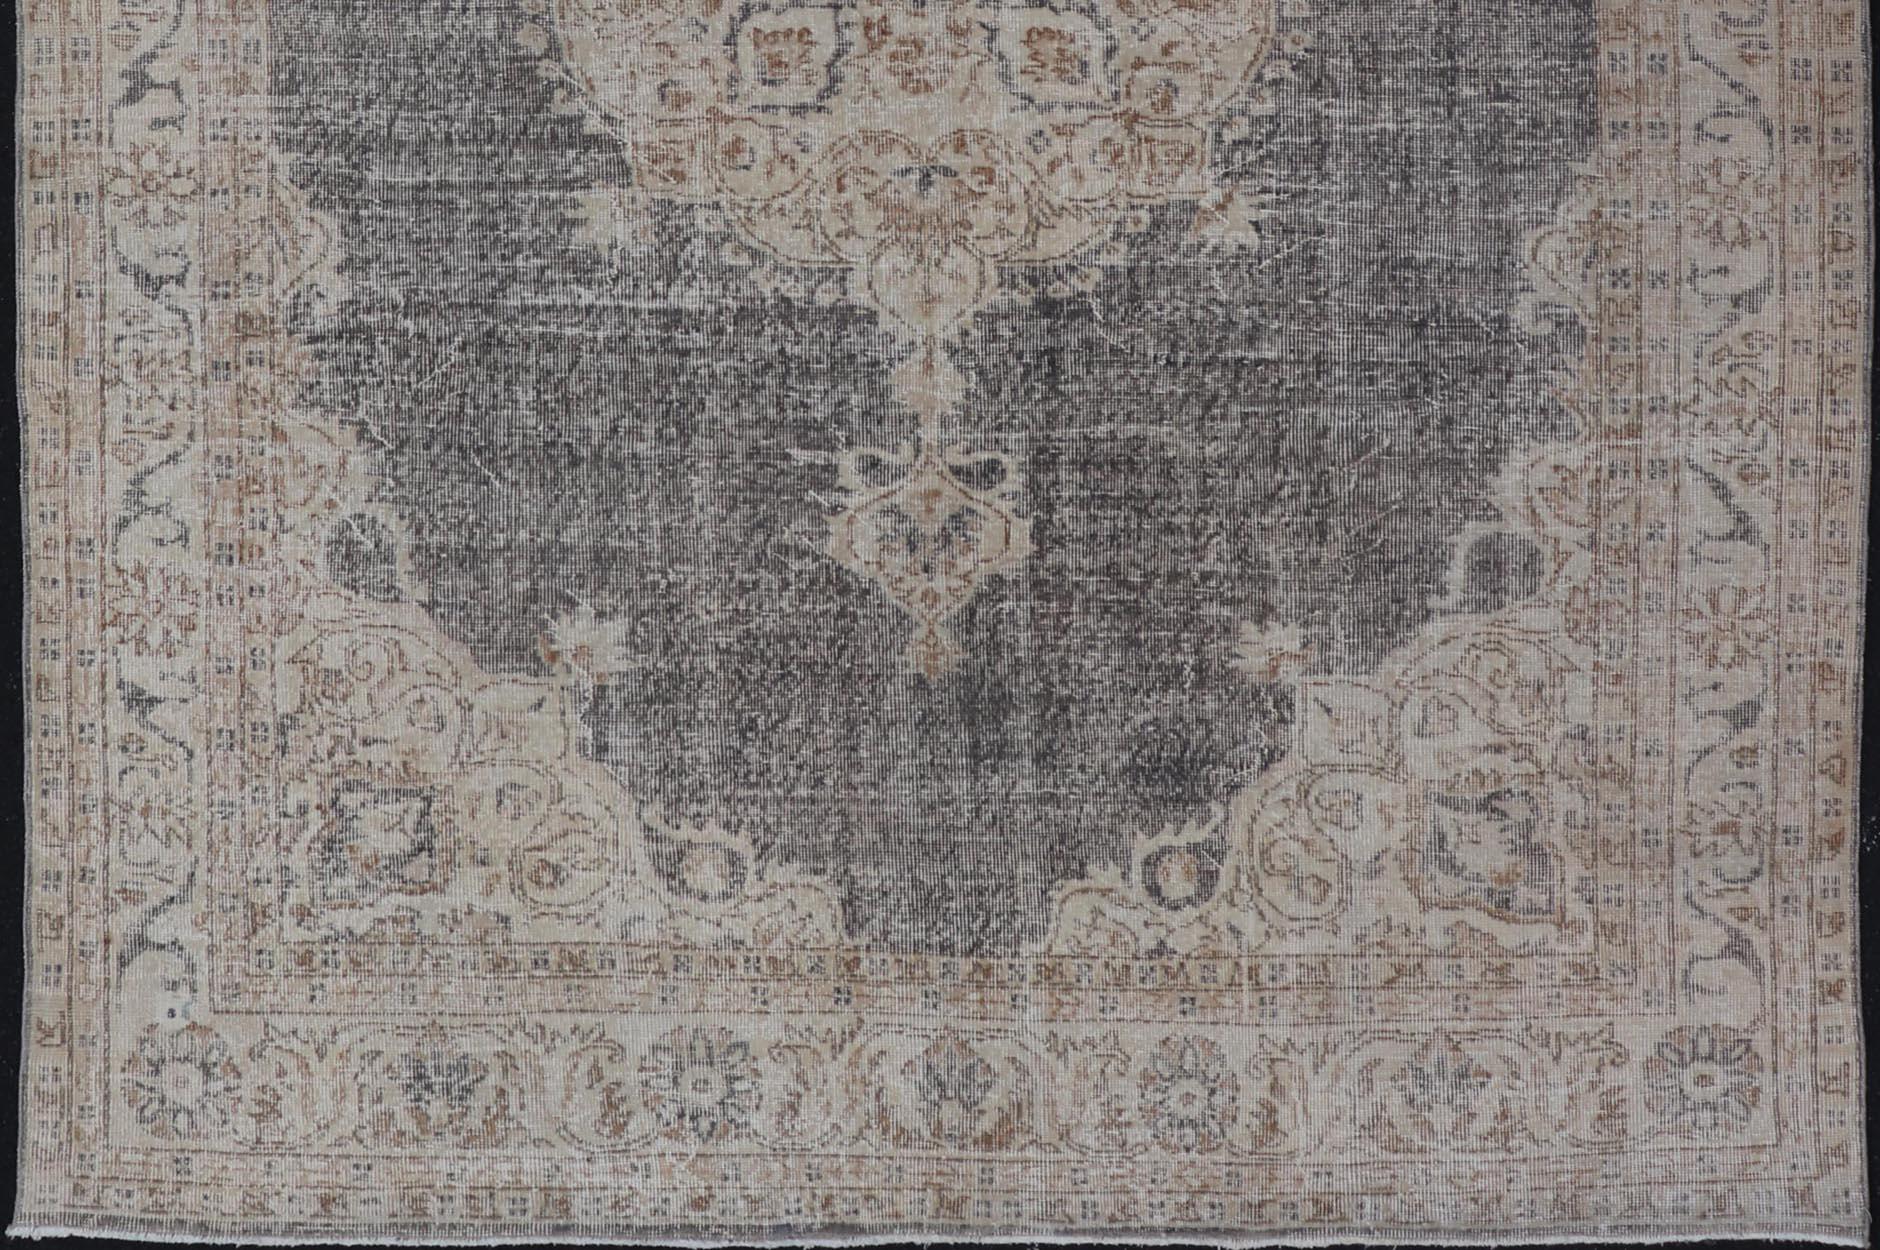 Distressed Turkish Carpet with medallion Design in Dark Gray, Lt. Brown & Cream For Sale 1